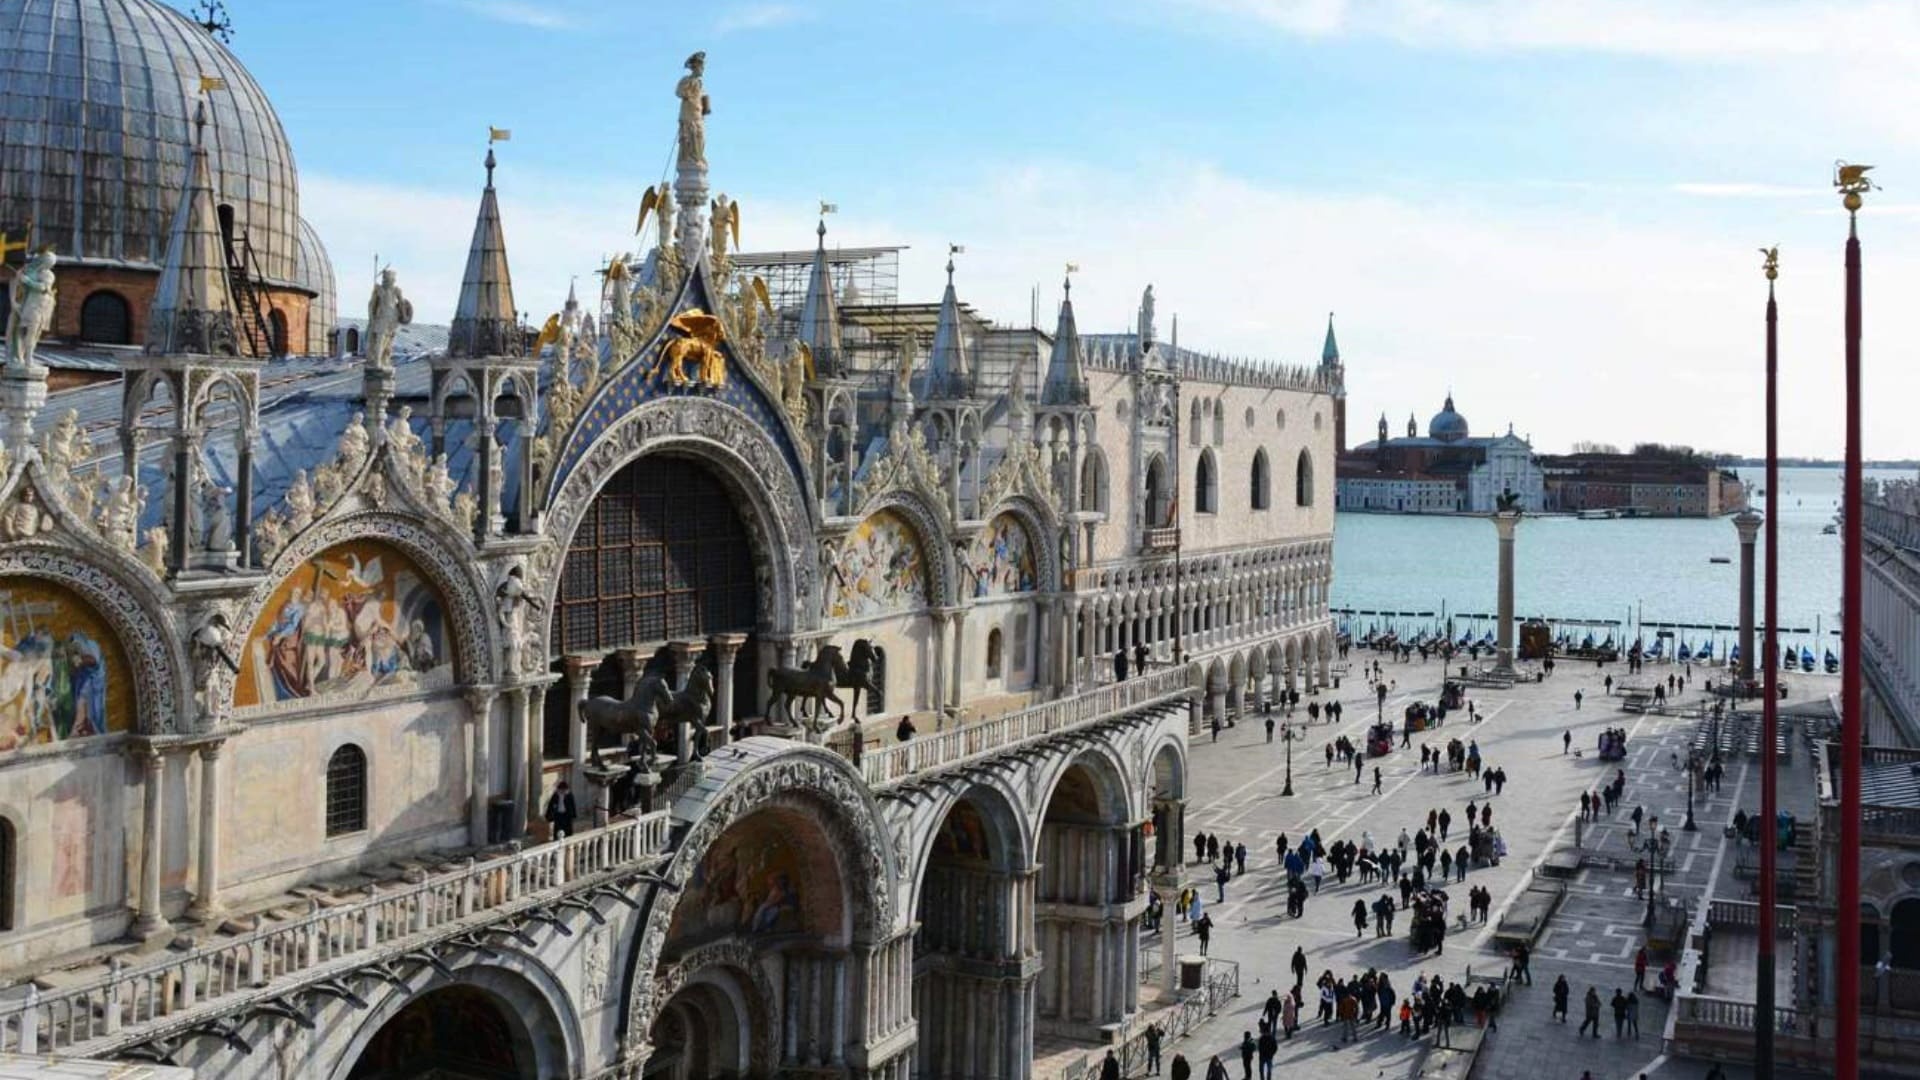 St. Mark's Basilica, Tour inside, Venice Doge's Palace, Entrance ticket, 1920x1080 Full HD Desktop